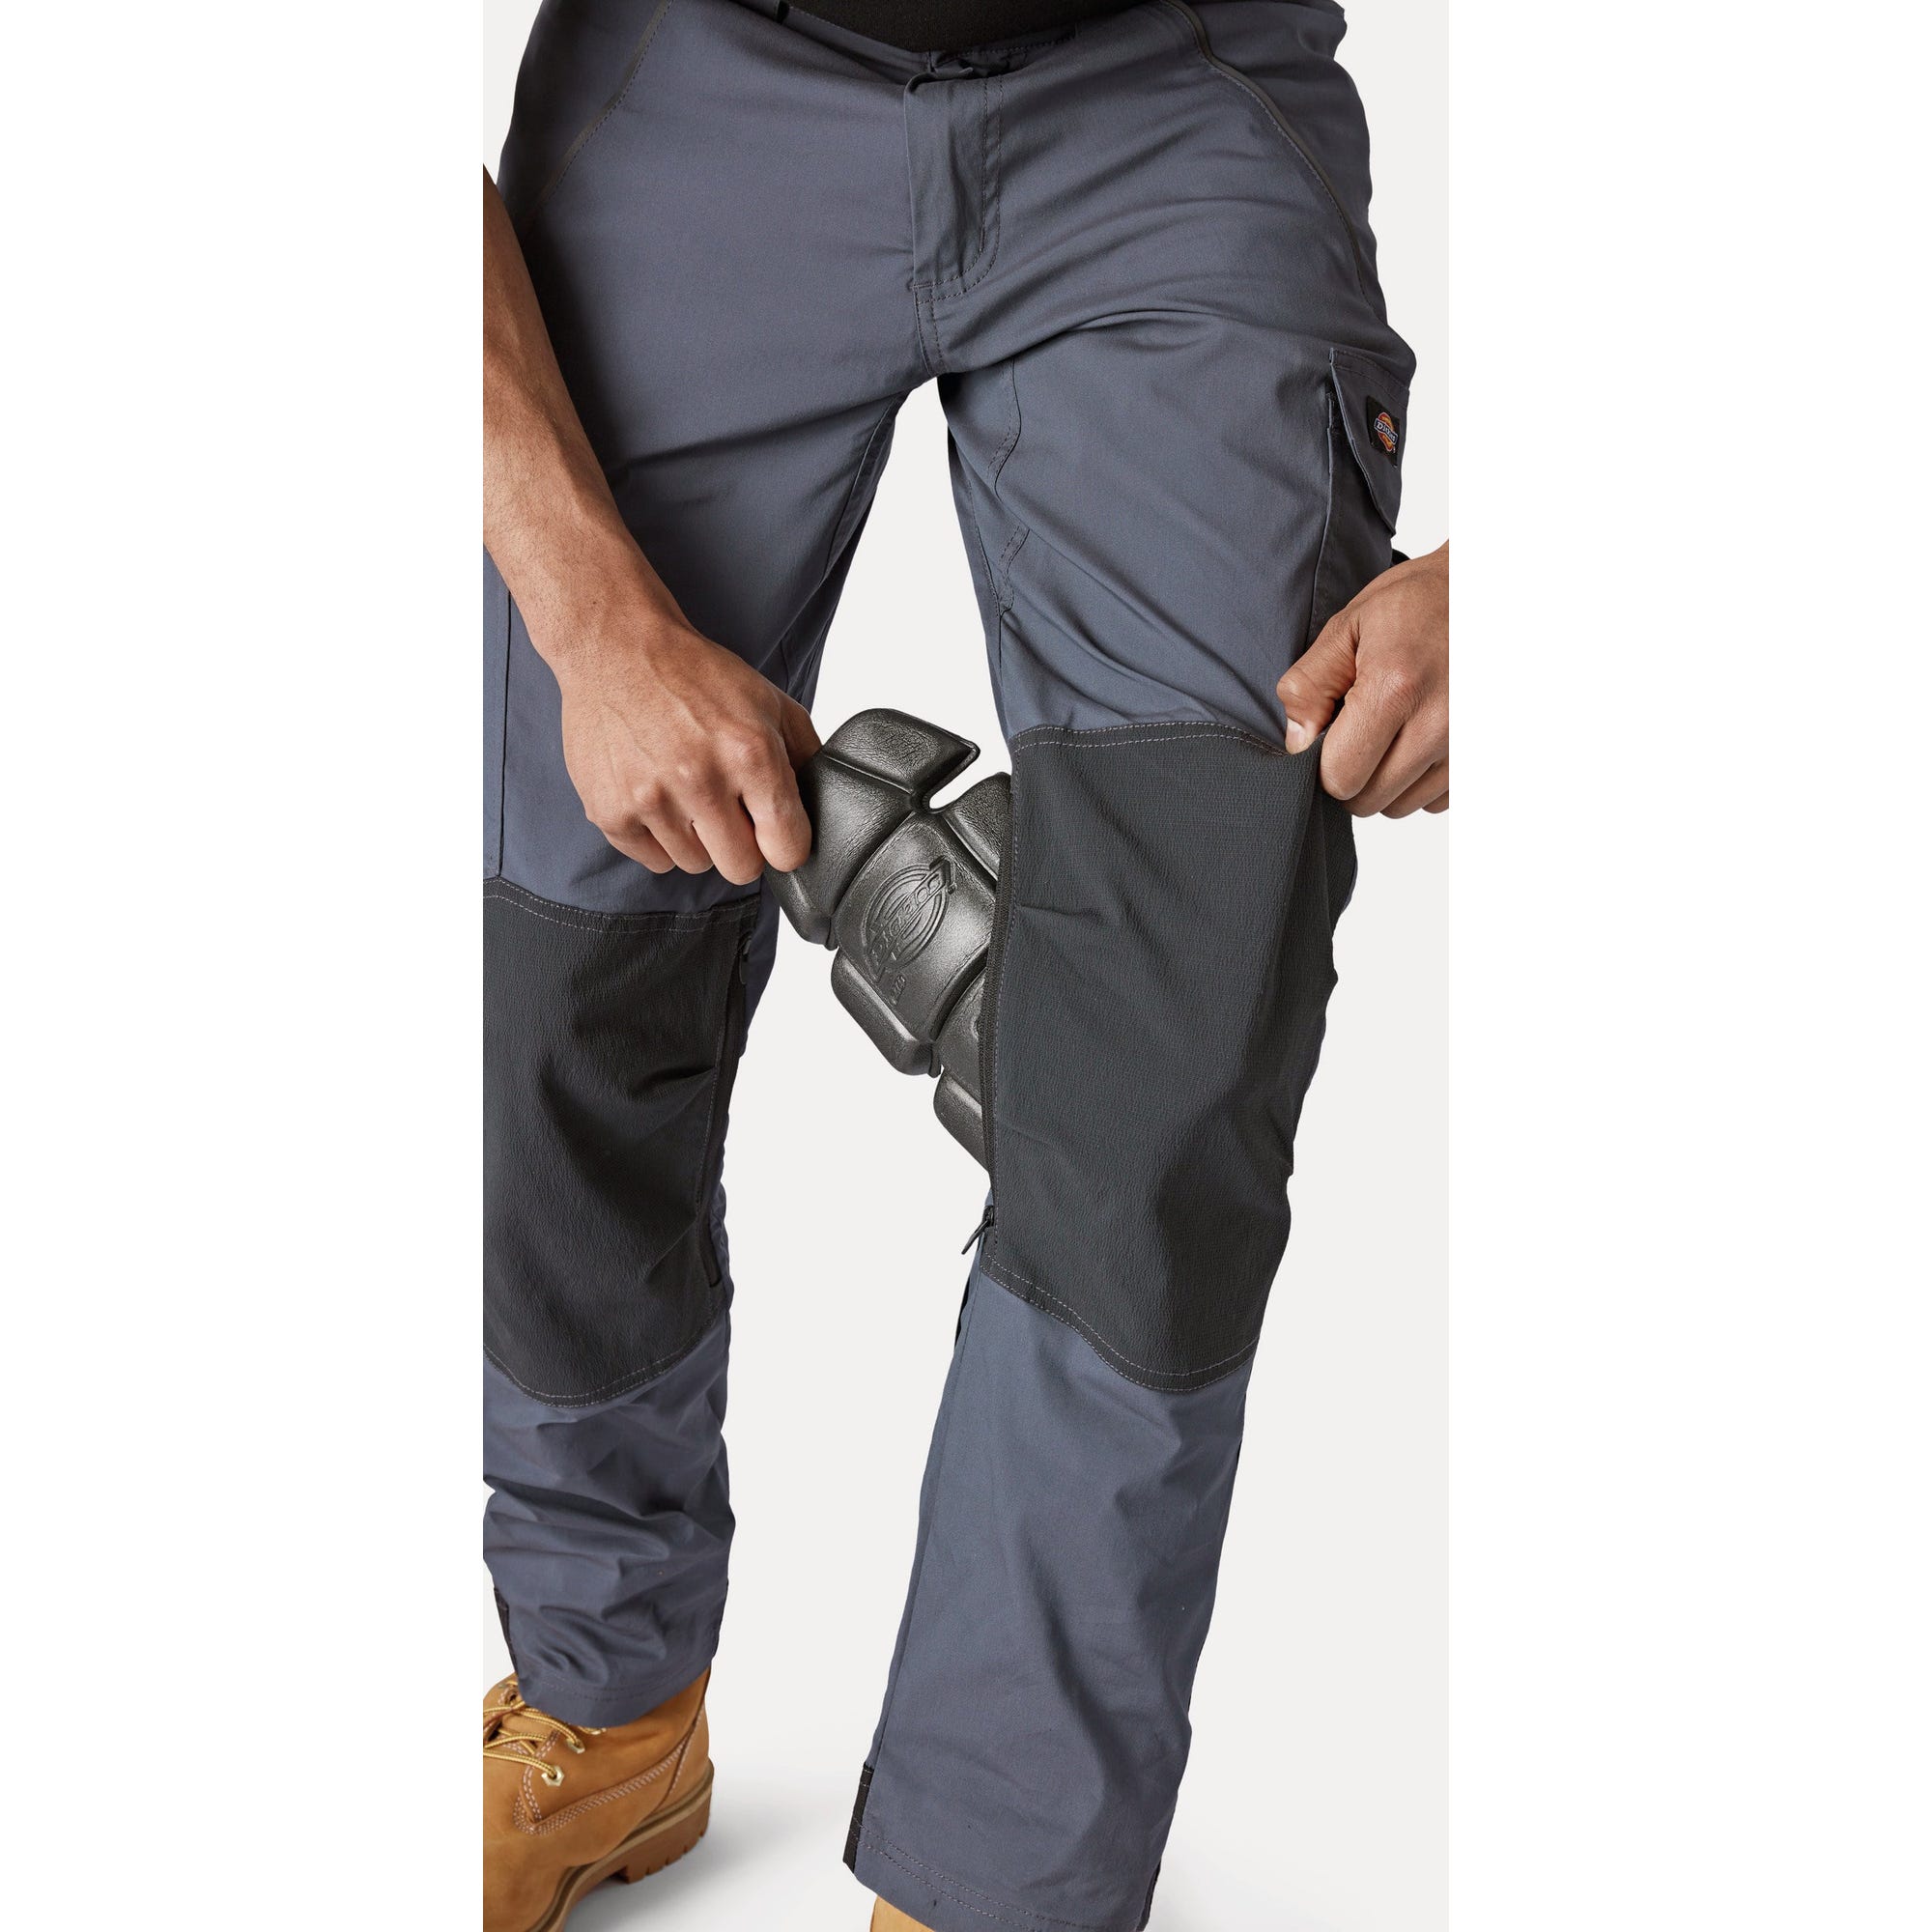 Pantalon léger Flex Gris - Dickies - Taille 42 5